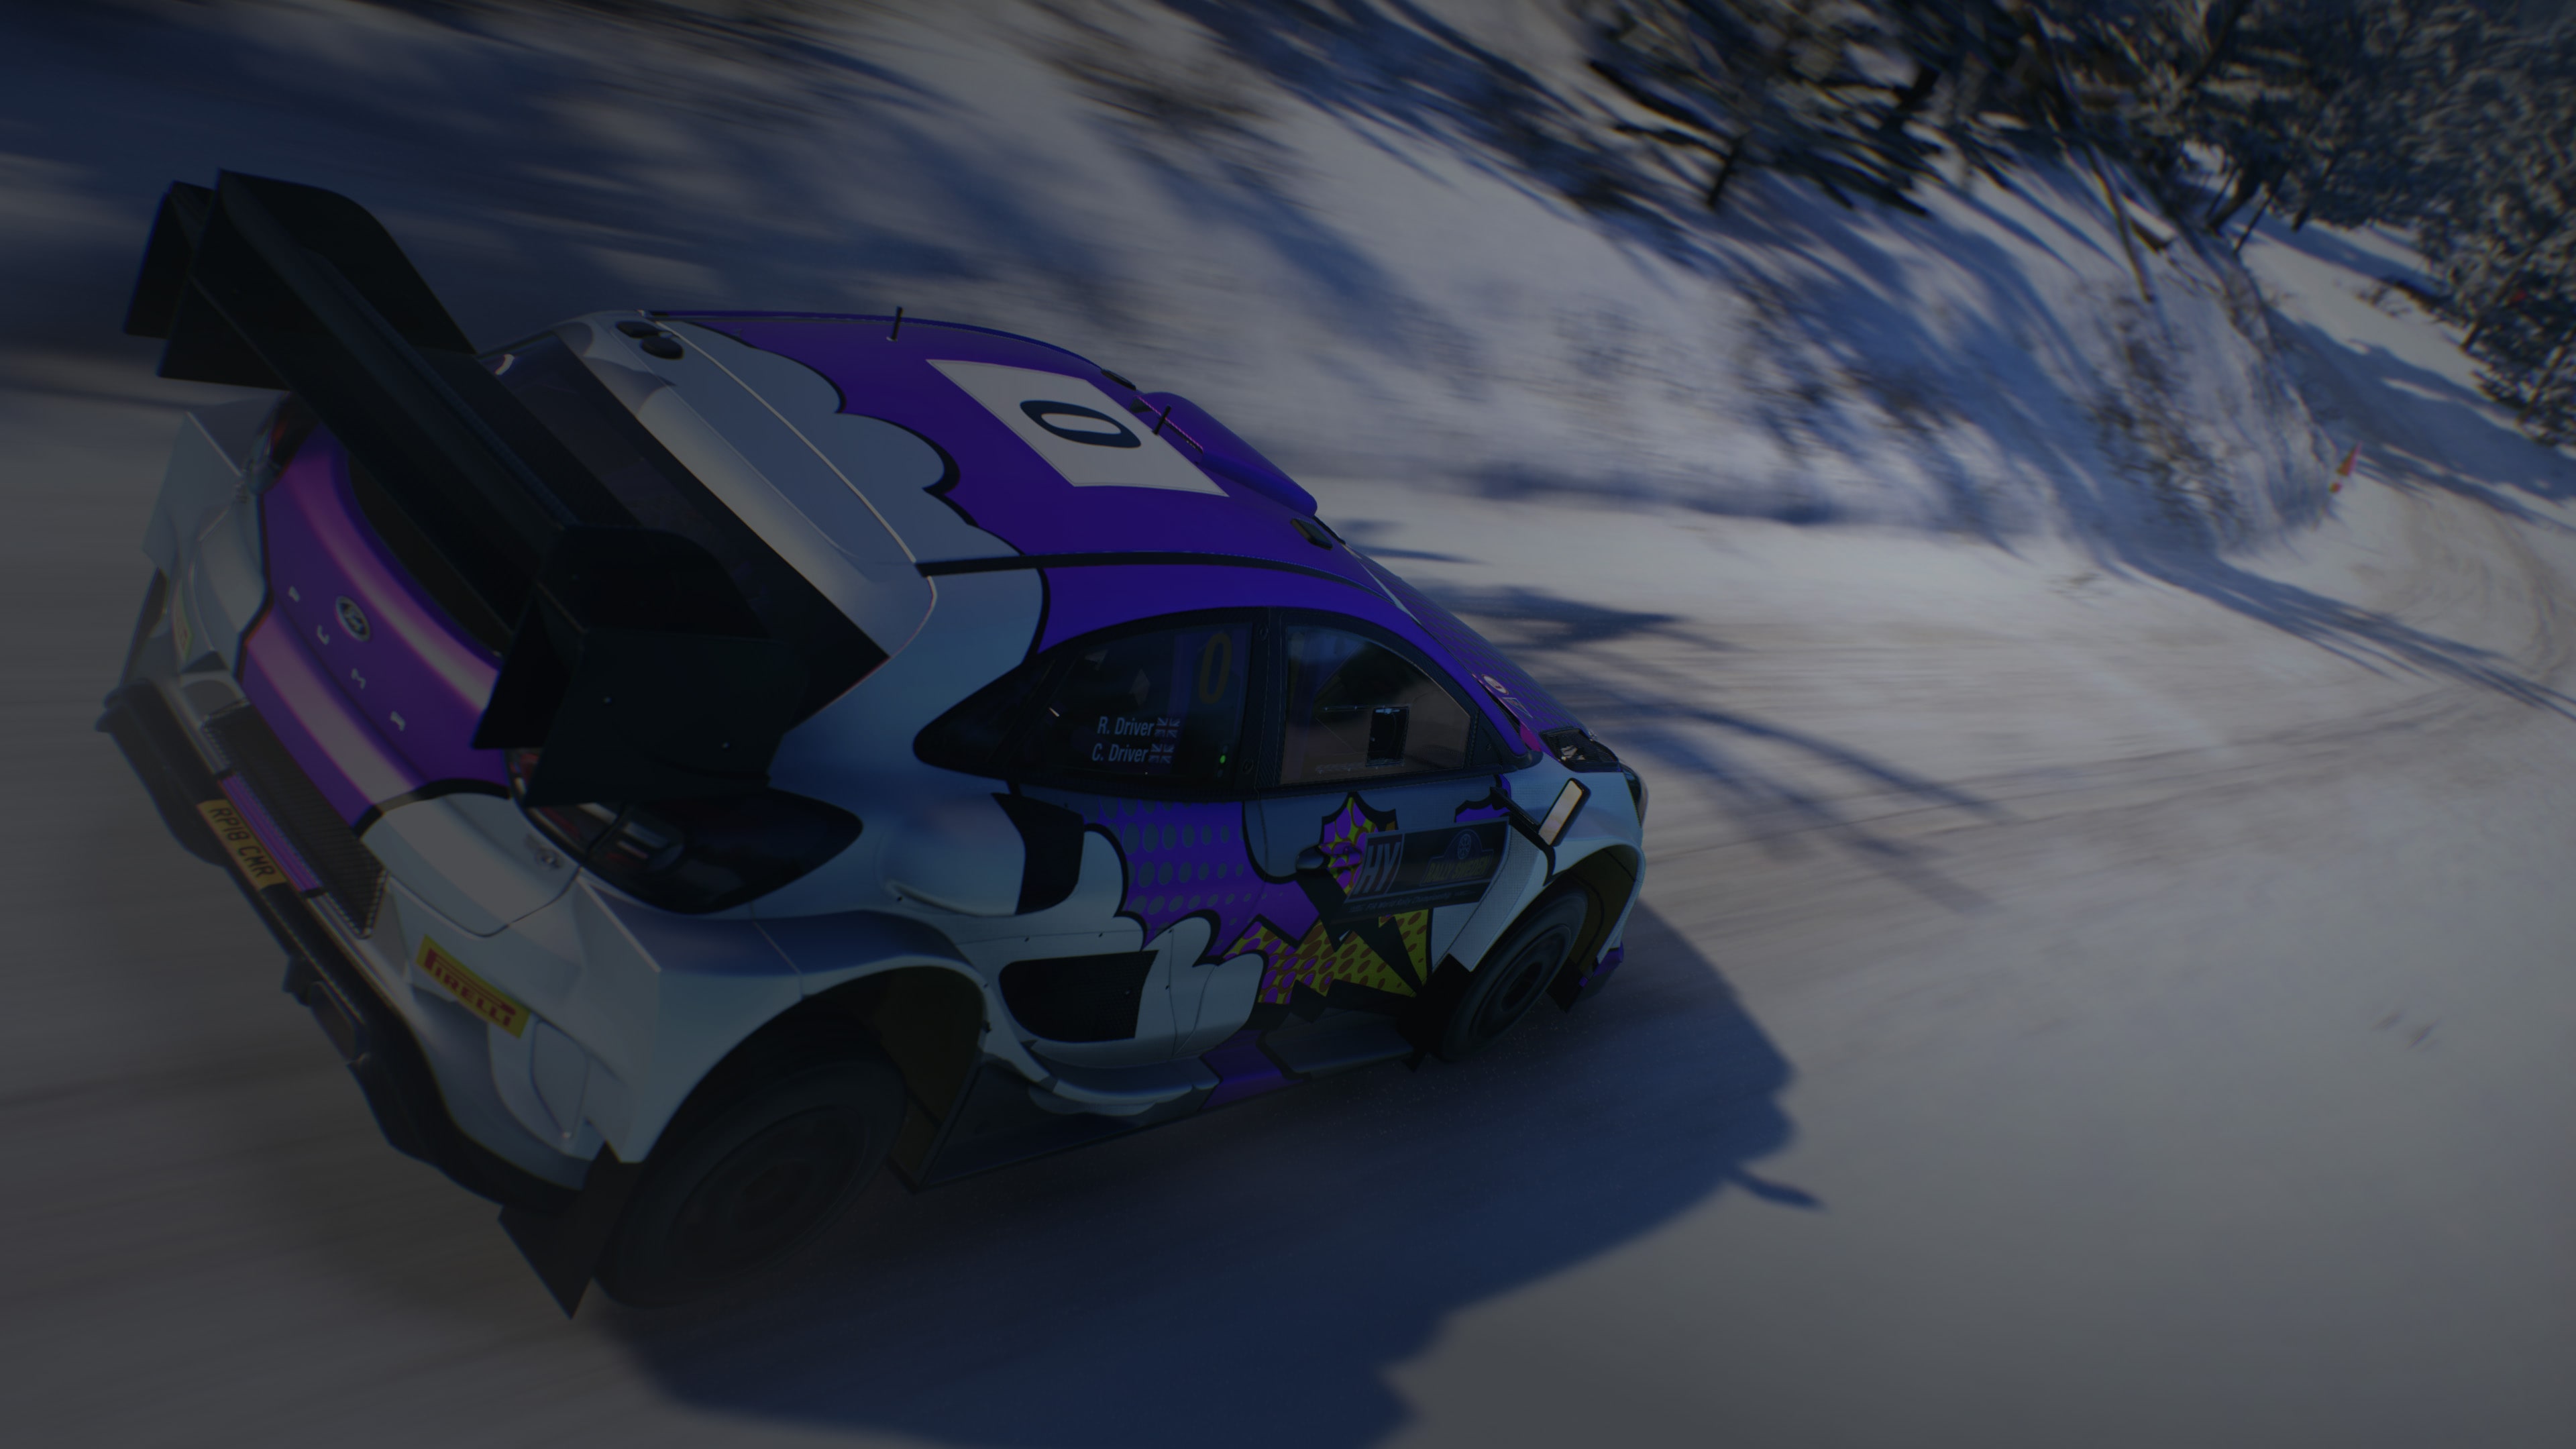 EA SPORTS™ WRC